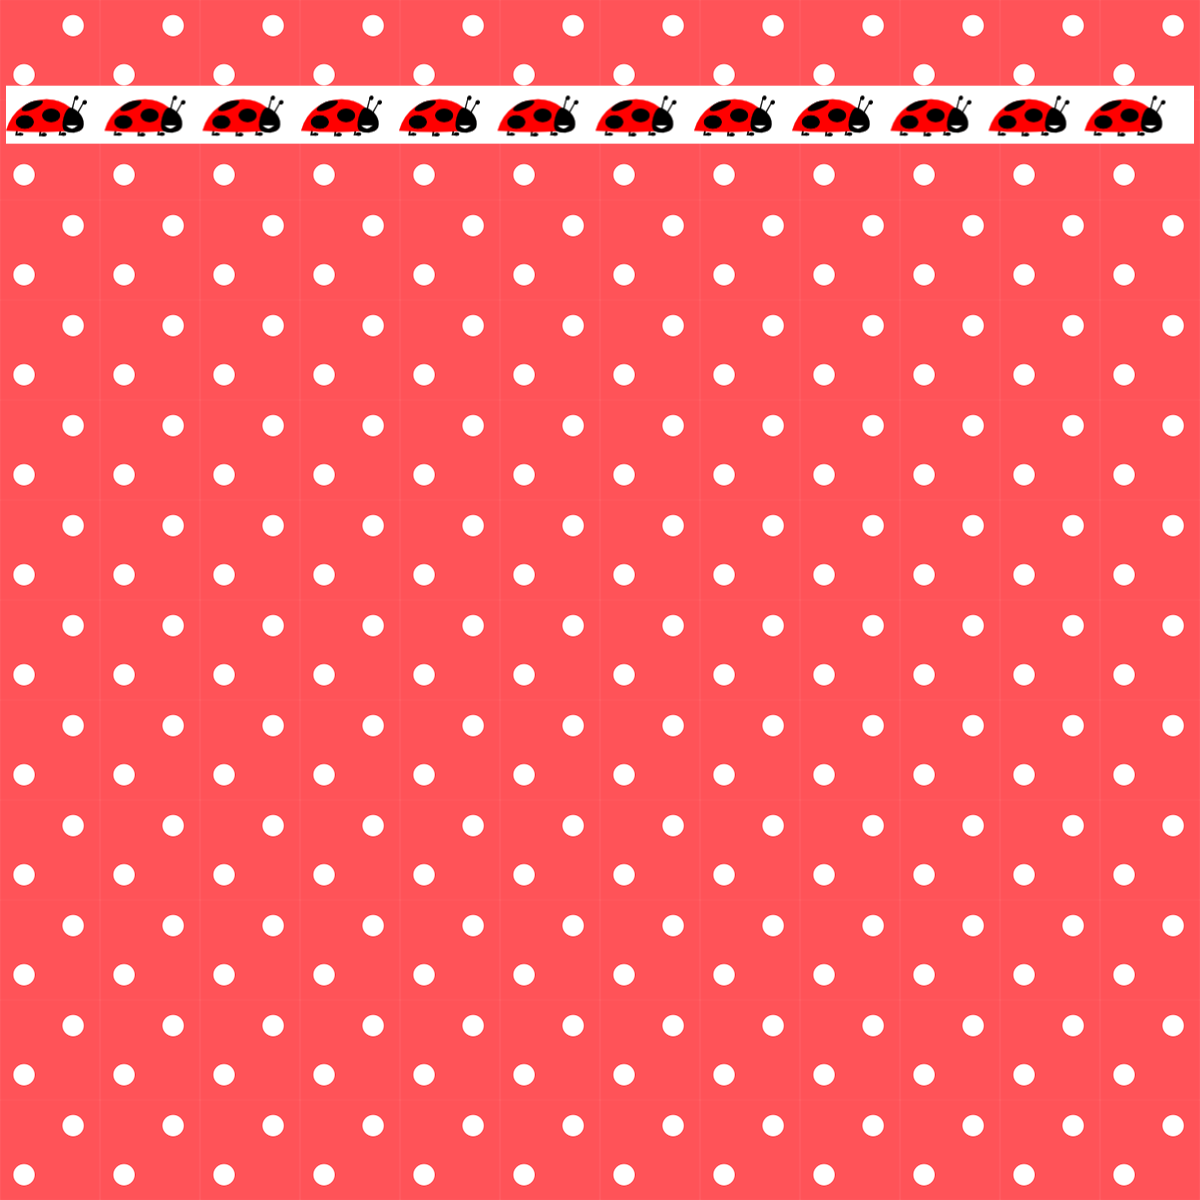 Free digital polka dot scrapbooking papers with ladybug border ...